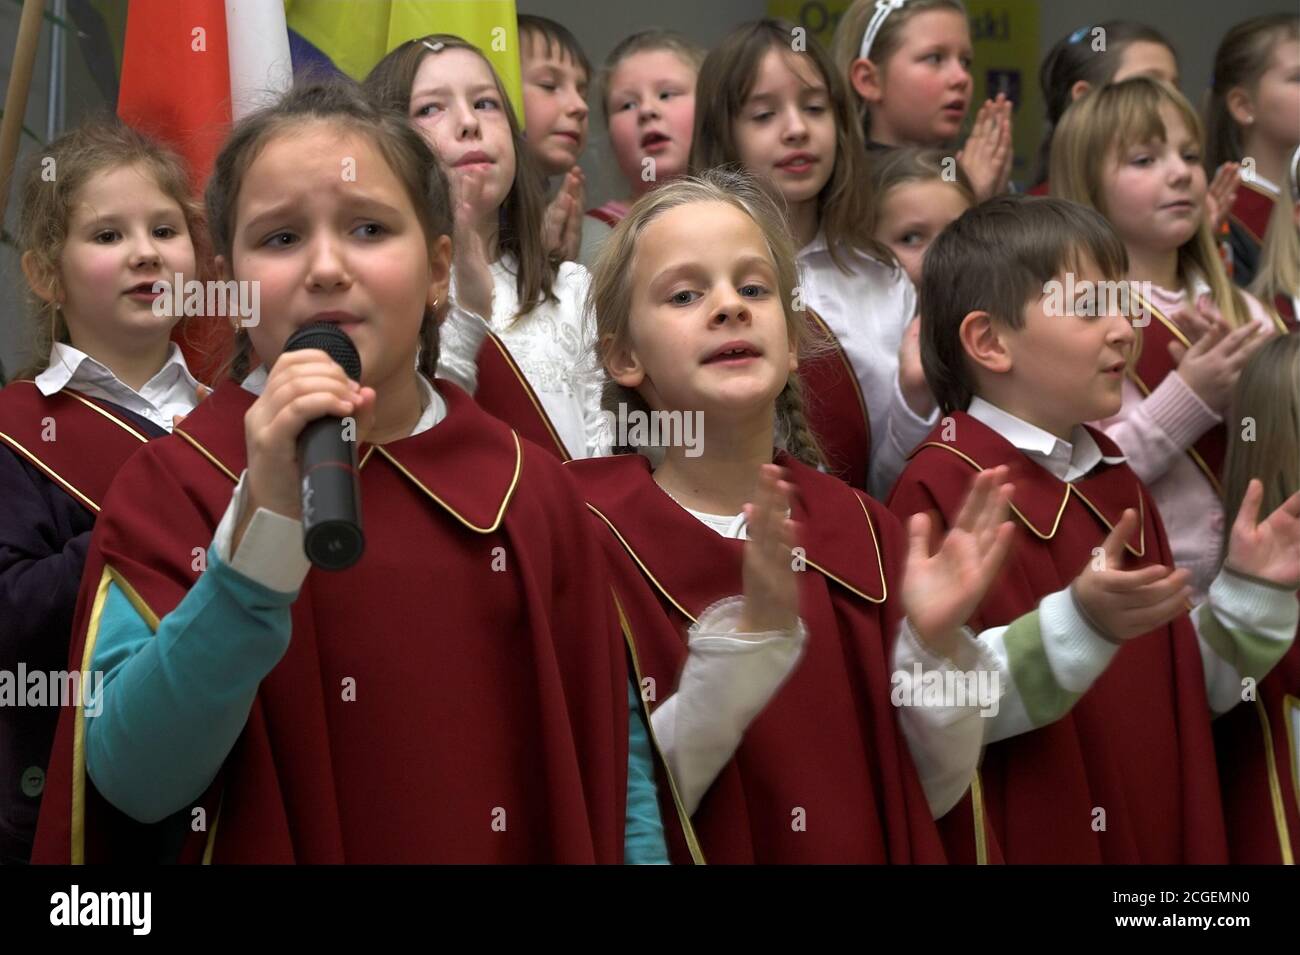 Canta e canta il coro dei bambini. Un gruppo di bambini cantanti. Der kleine Kinderchor singt und klatscht. Eine Gruppe singender Kinder. Schola Foto Stock